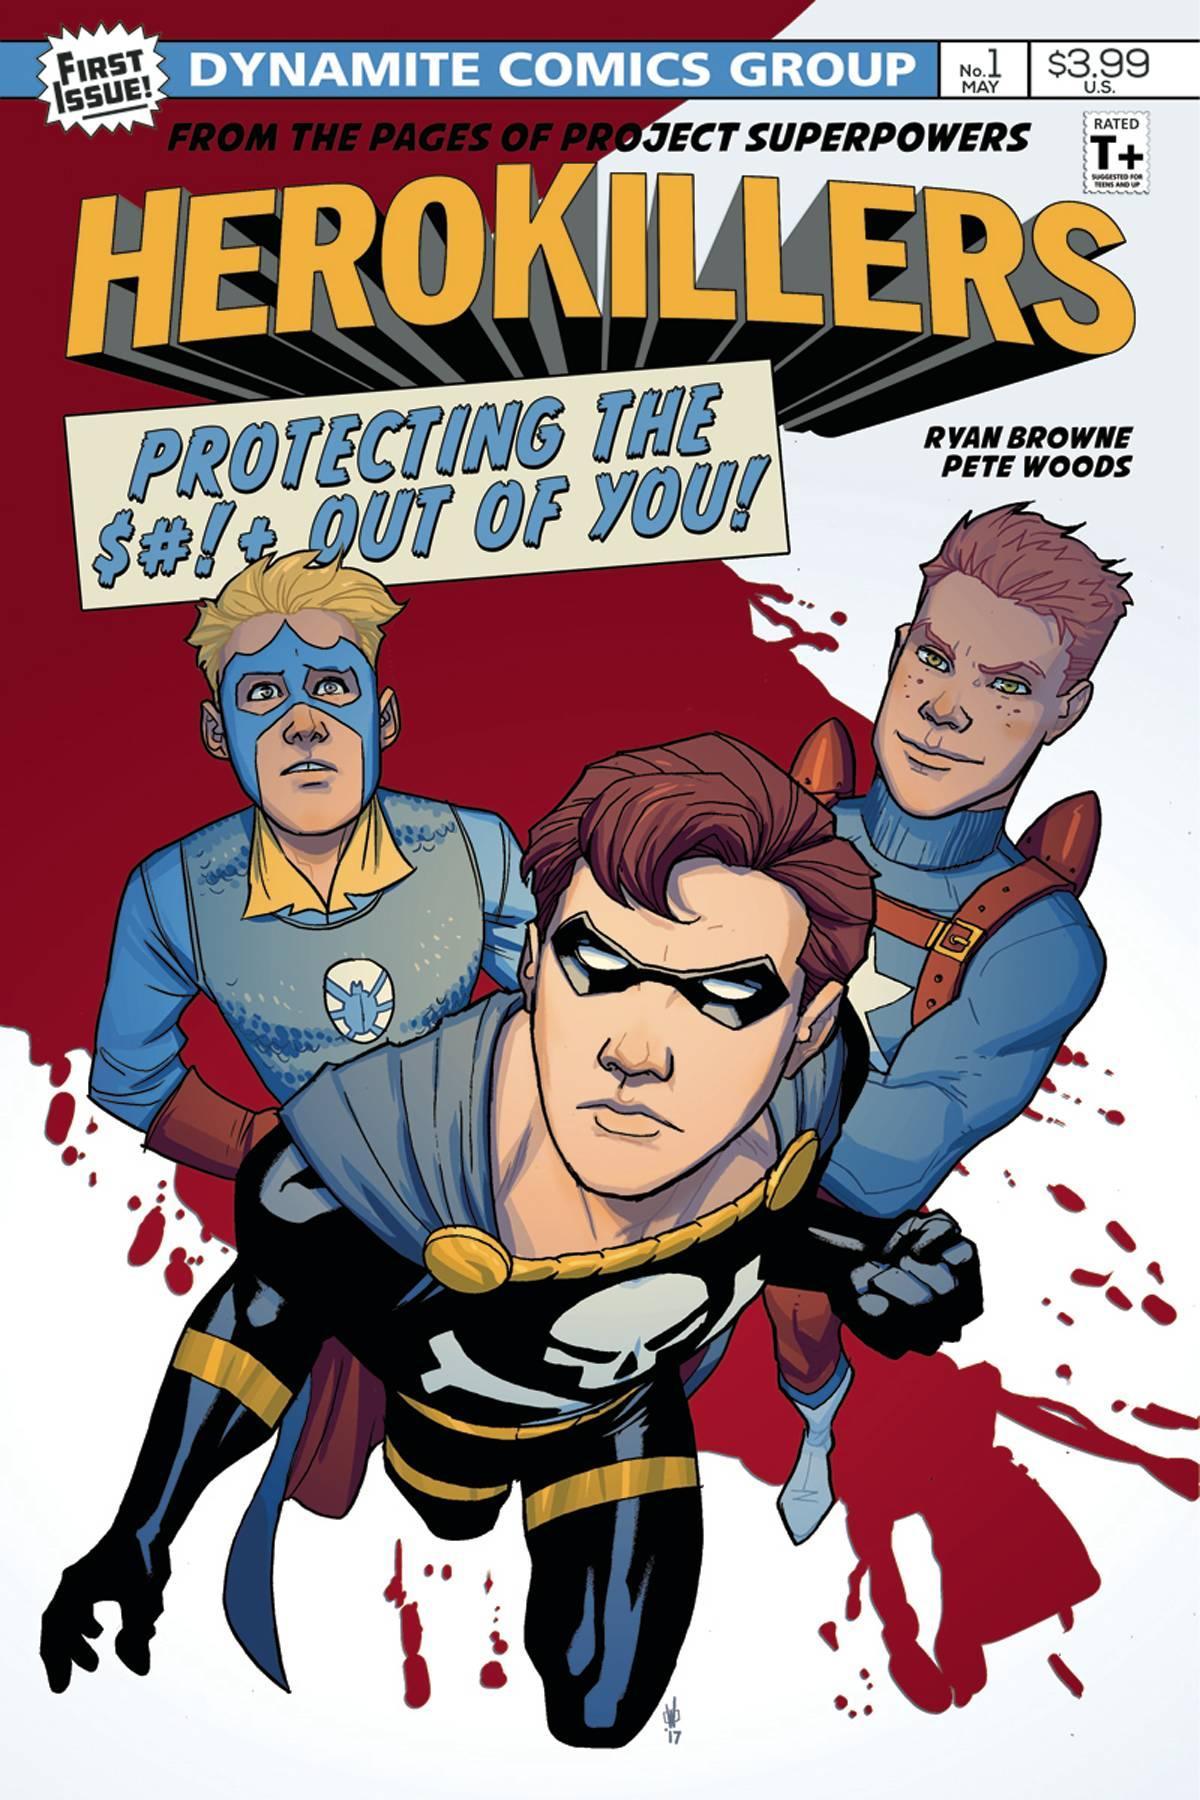 PROJECT SUPERPOWERS HERO KILLERS #1 - Kings Comics